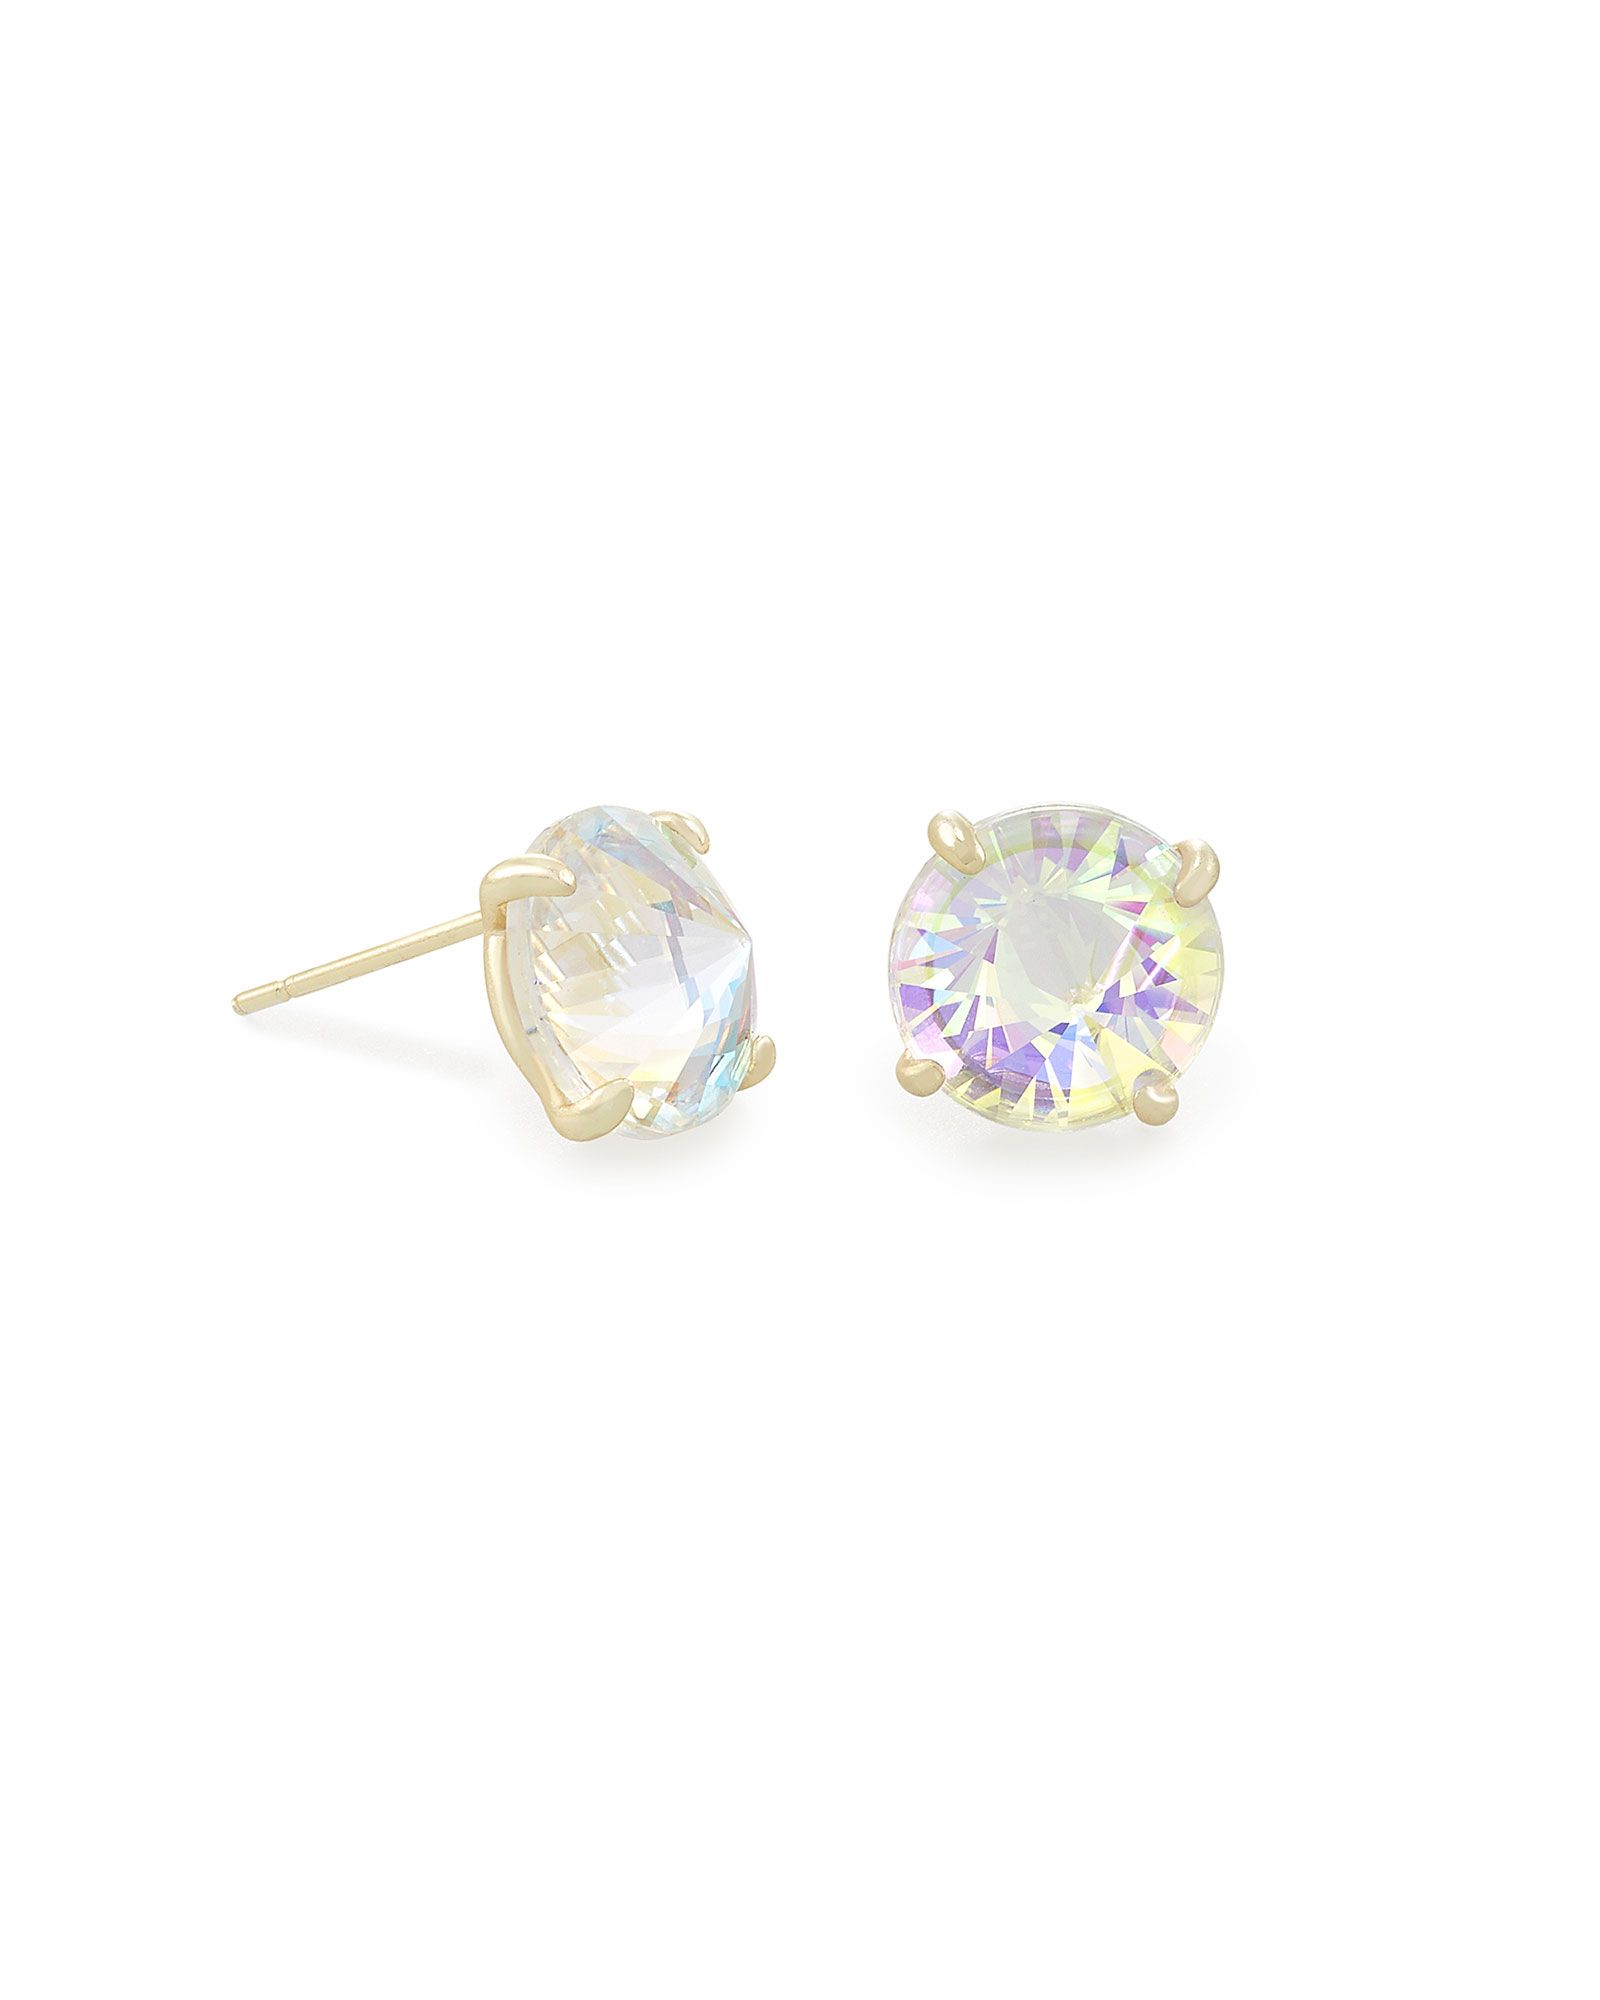 Jolie Gold Stud Earrings in Dichroic Glass | Kendra Scott